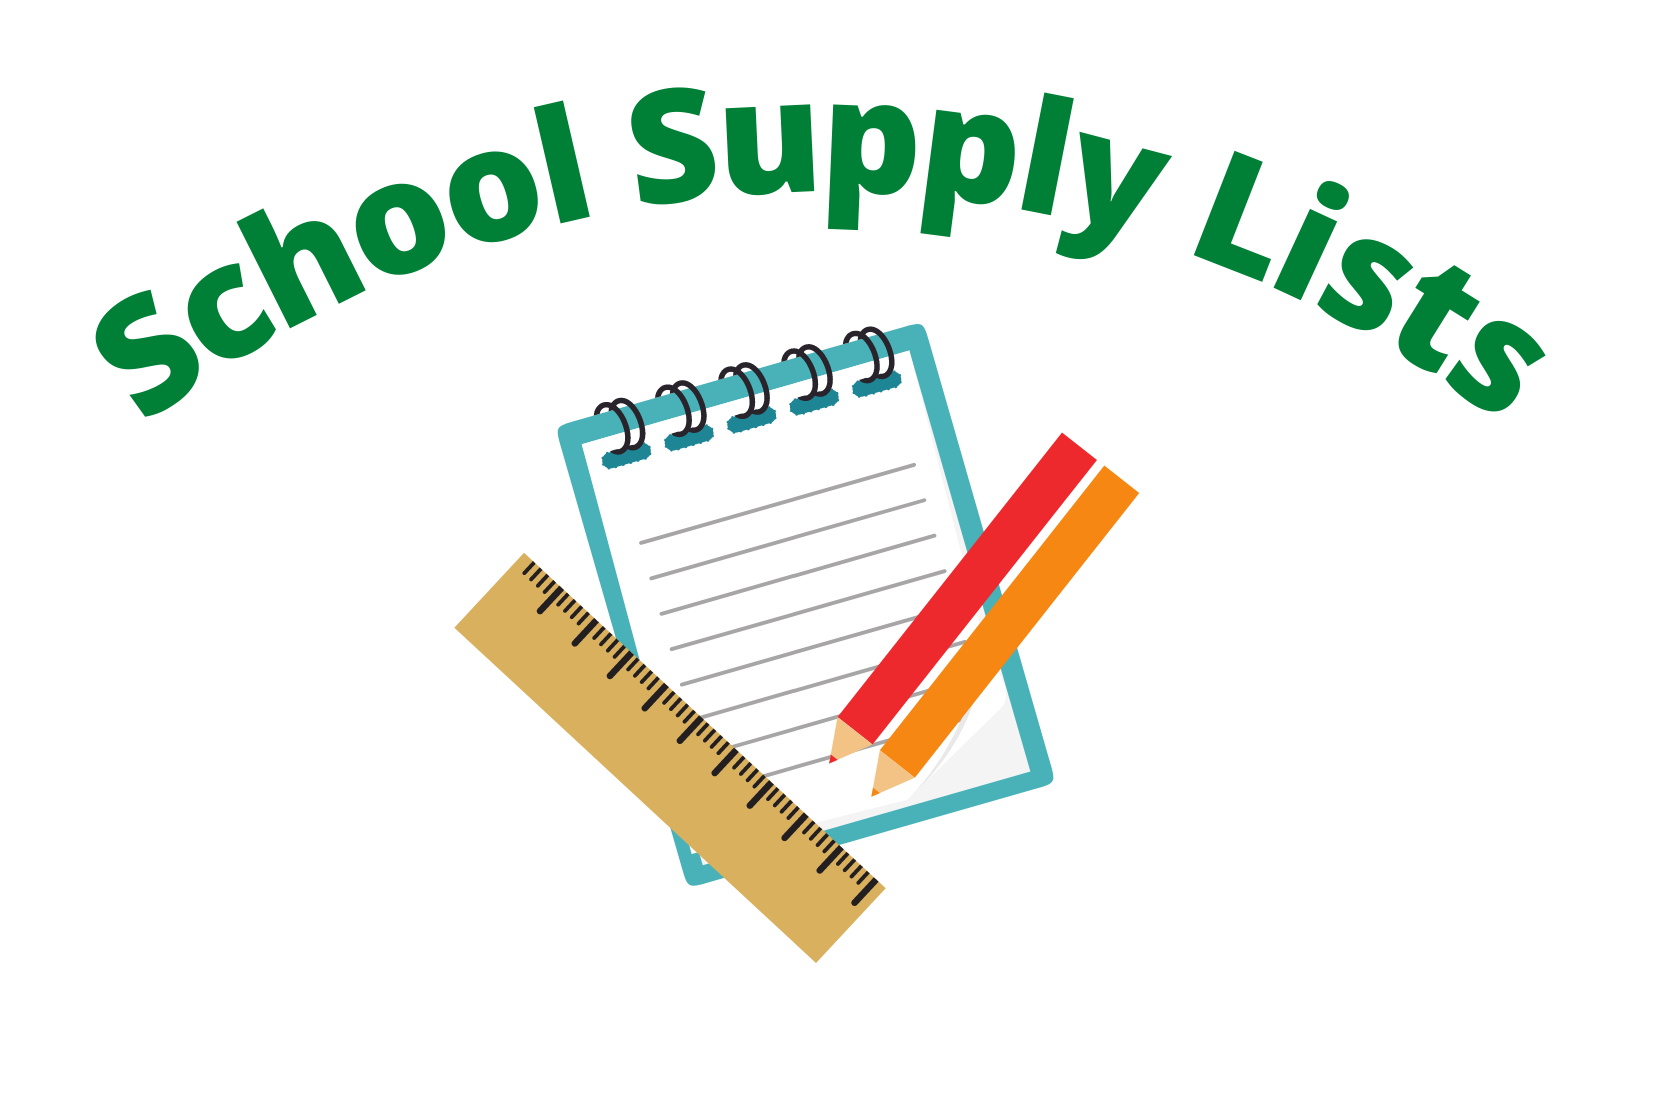 School Supply lists